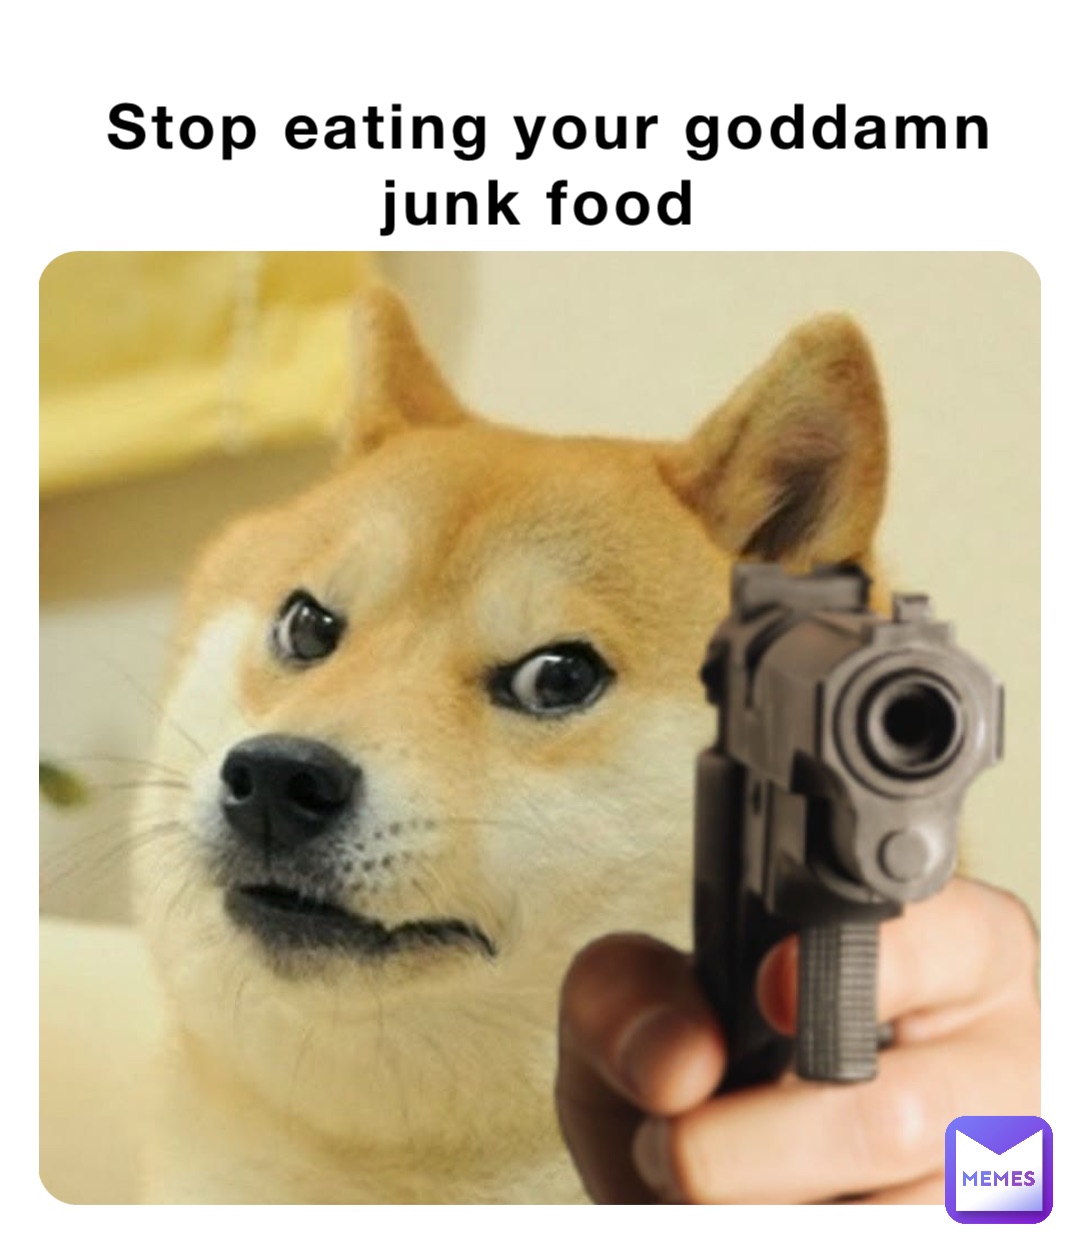 Stop eating your goddamn junk food